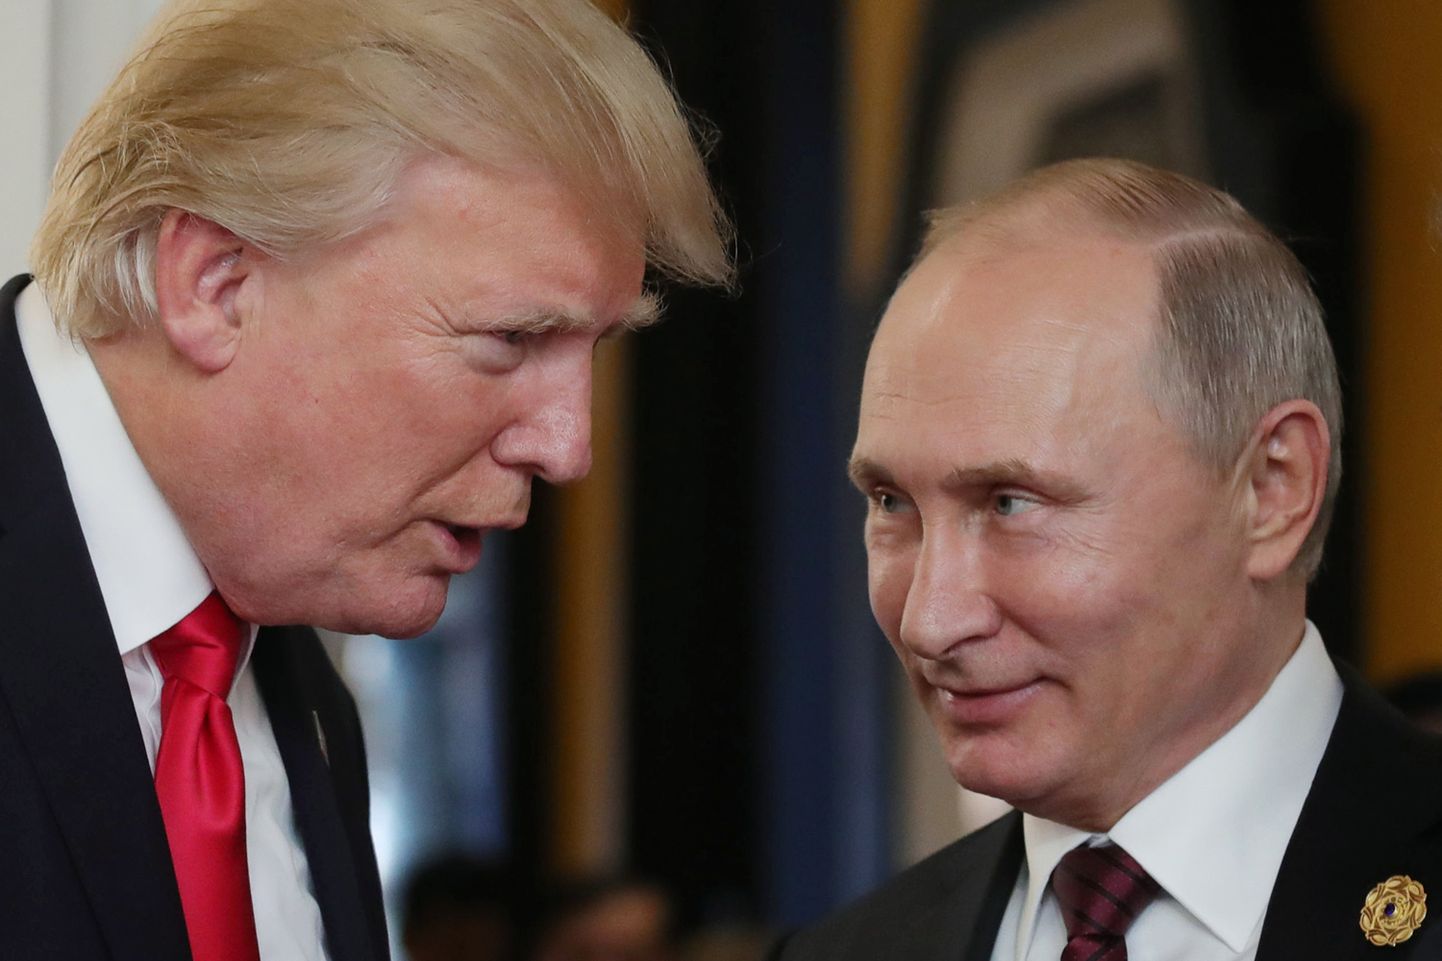 Donald Trump ja Vladimir Putin.